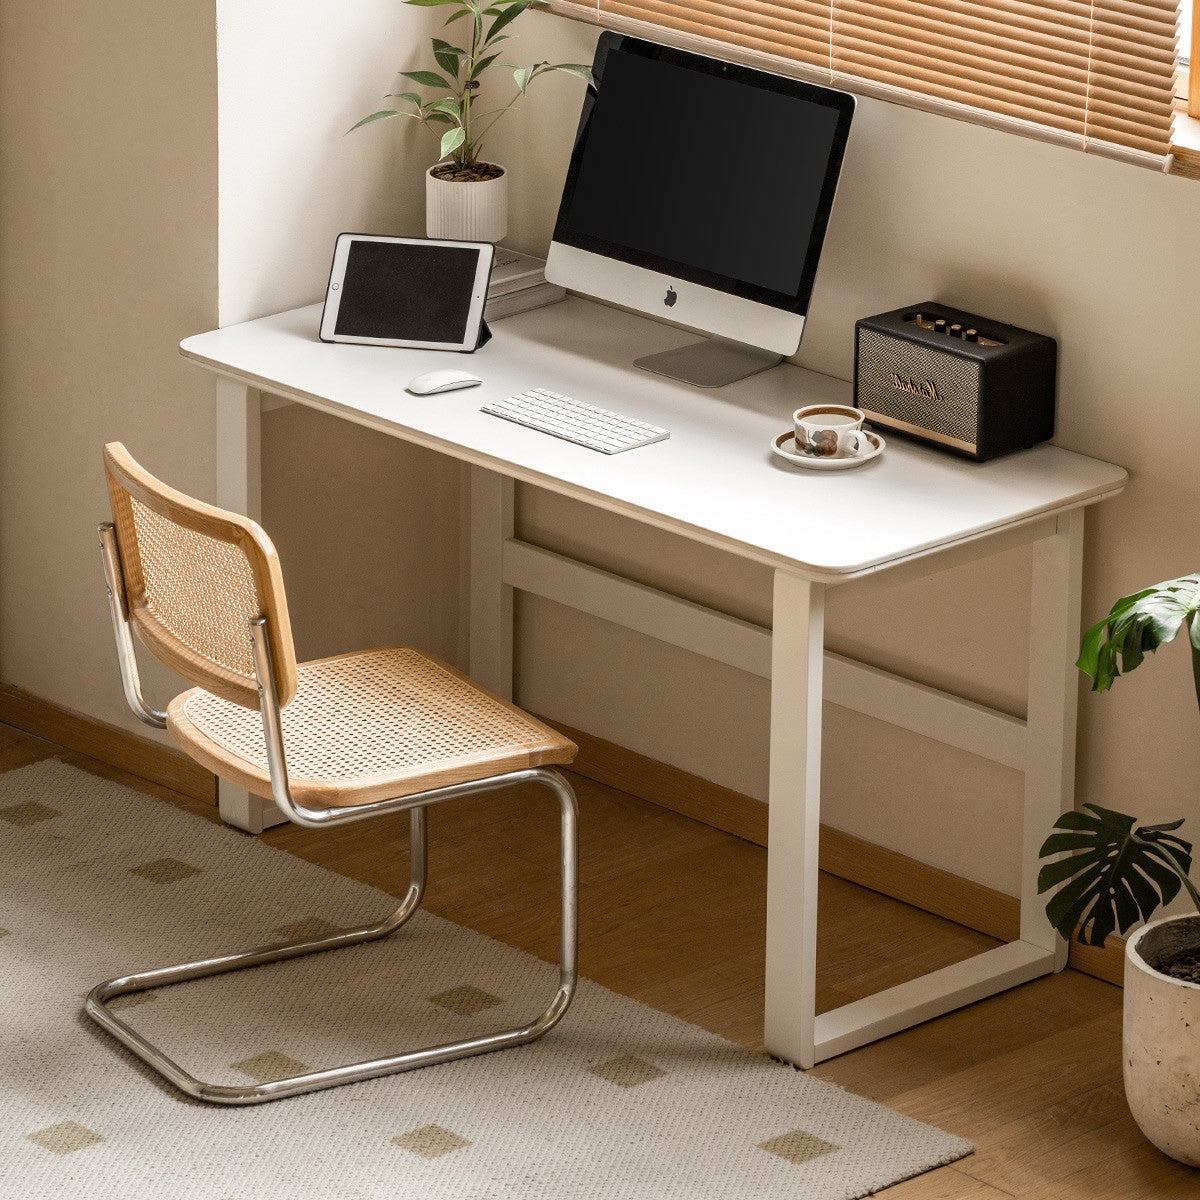 Birch solid wood slate desk white cream style "